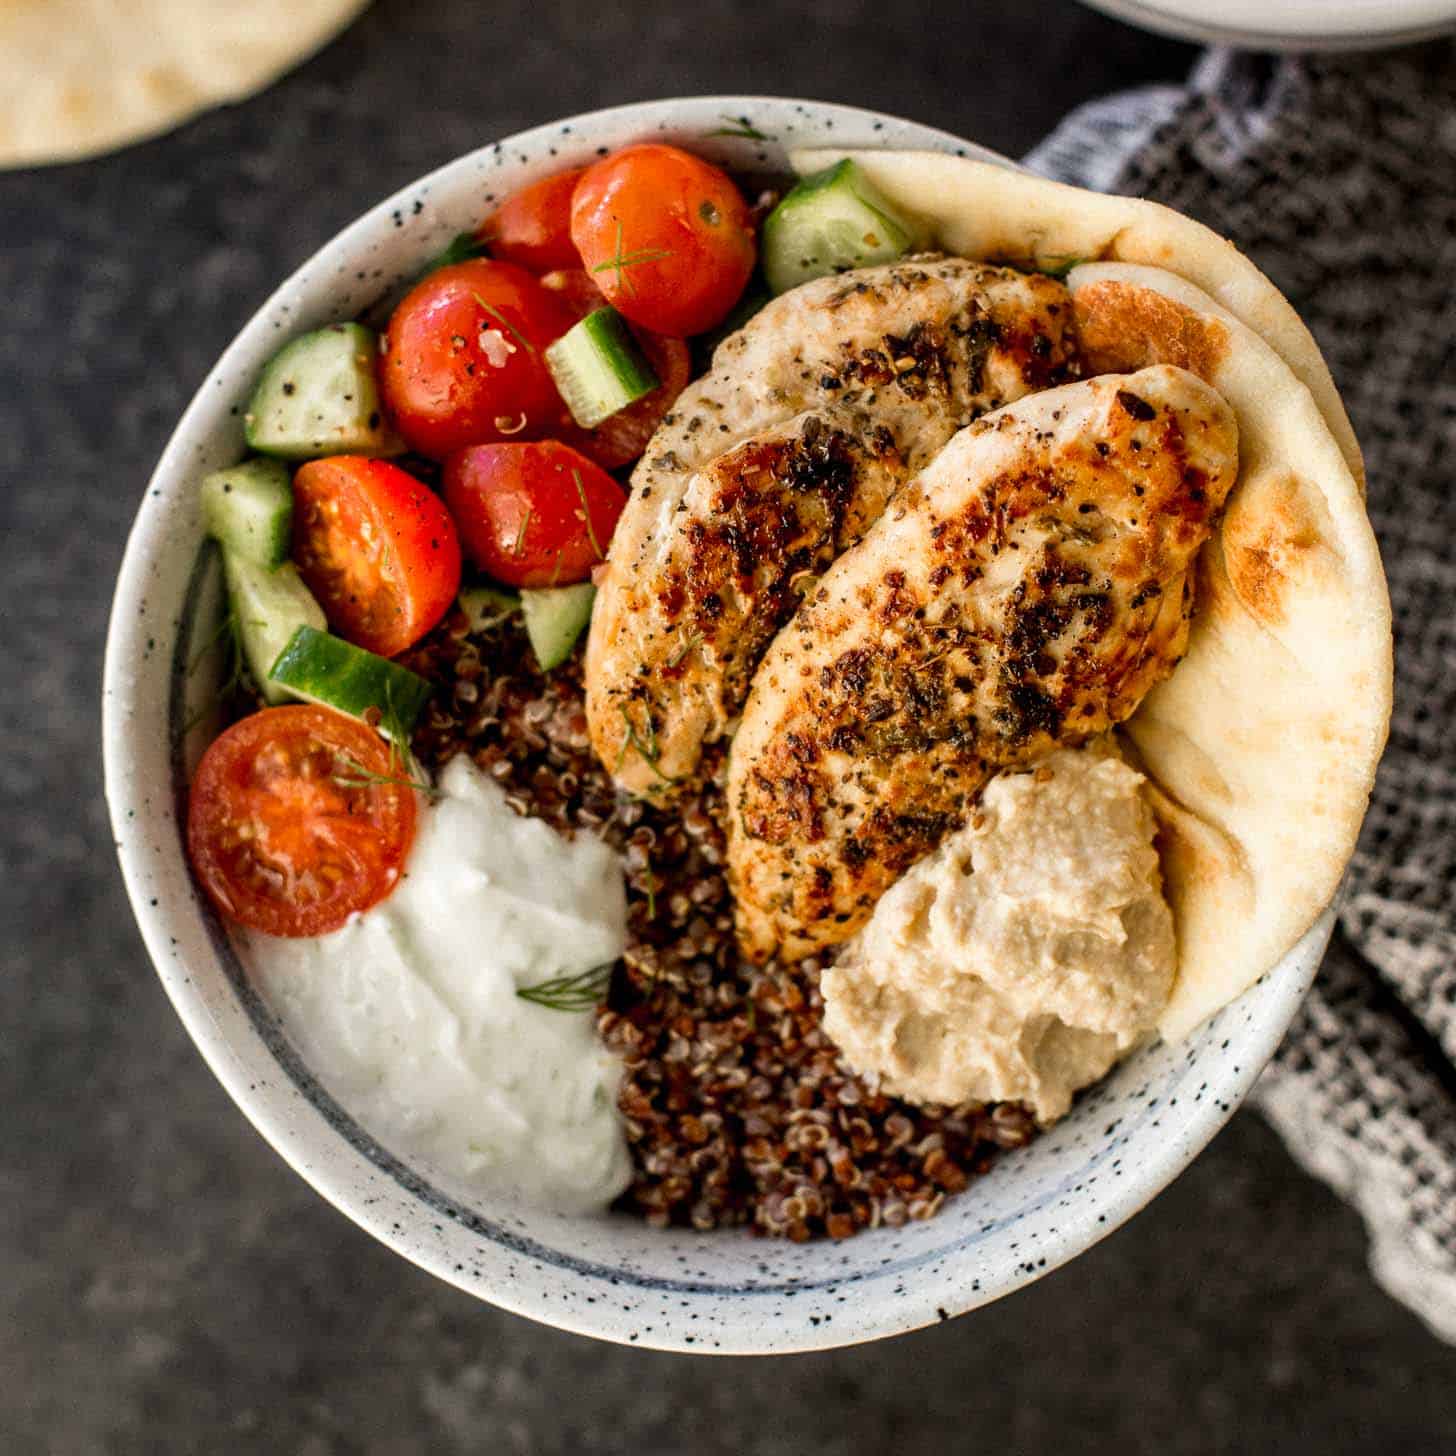 https://inquiringchef.com/wp-content/uploads/2020/03/Mediterranean-Chicken-Quinoa-Bowl_square.jpg